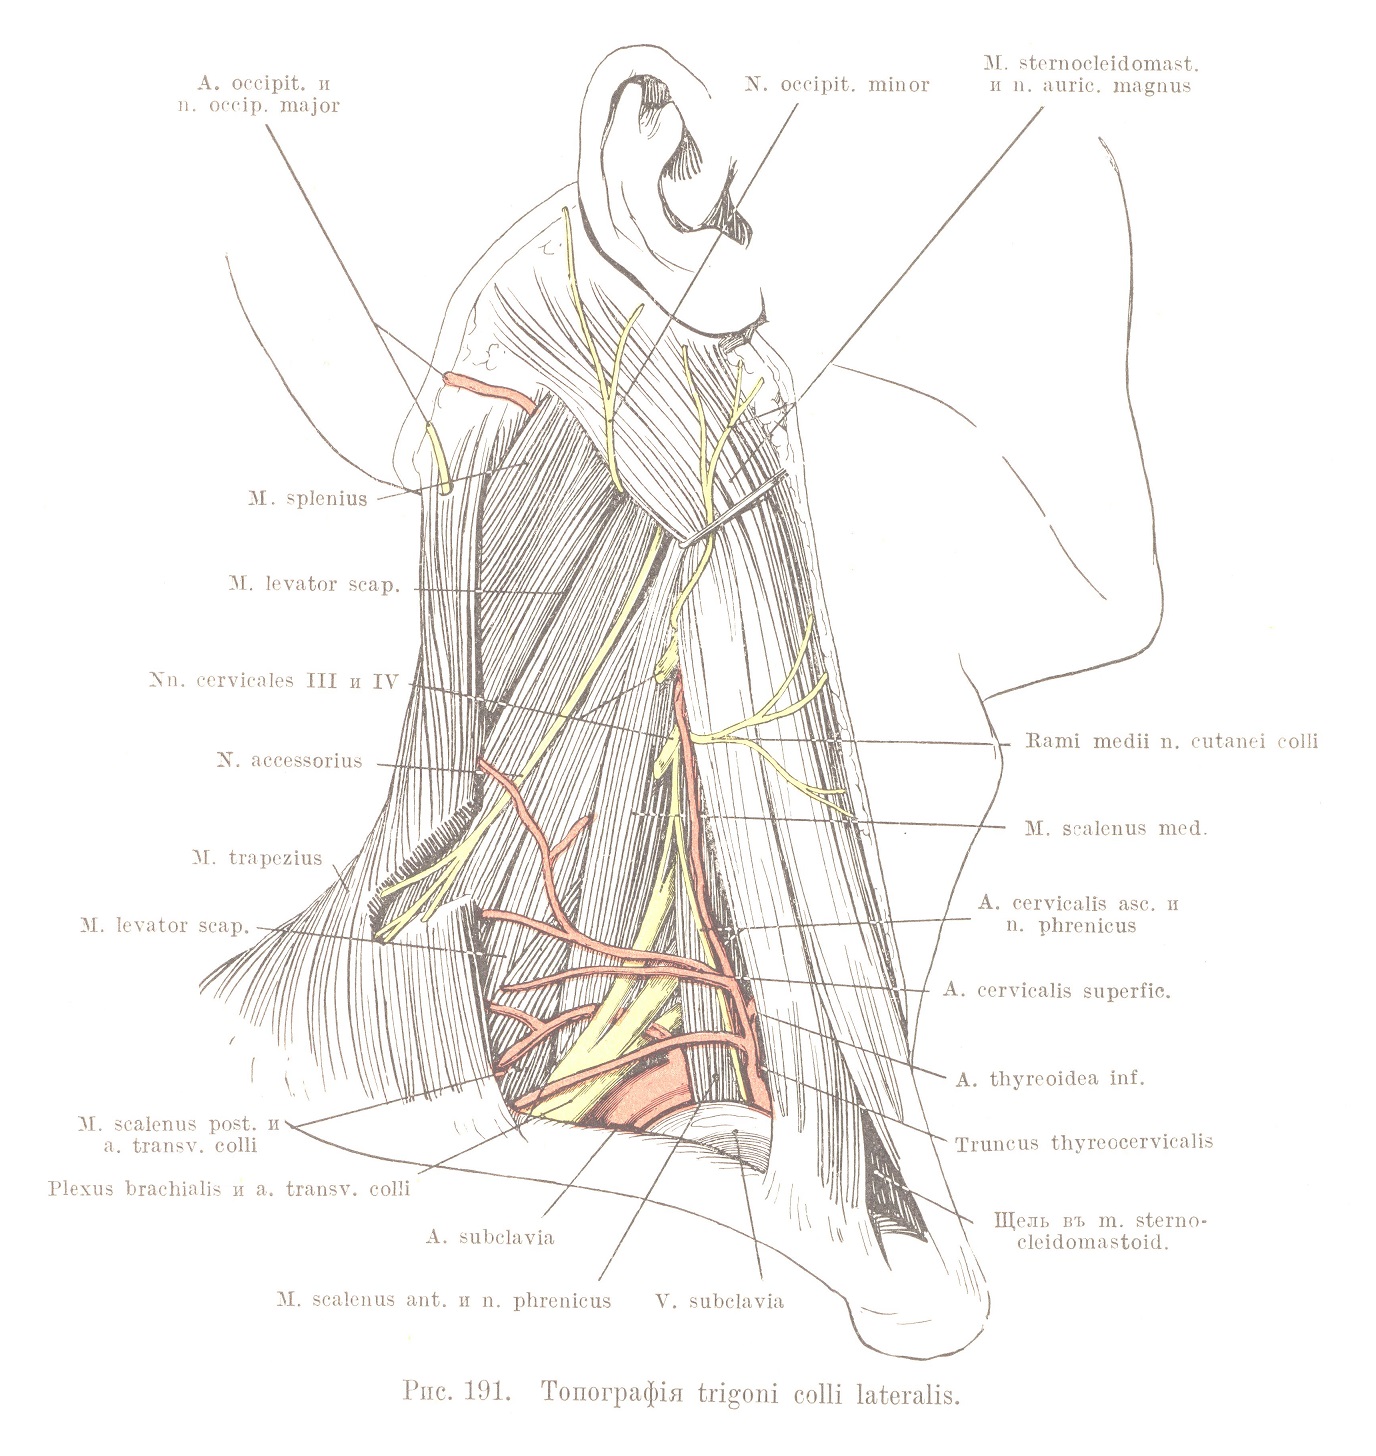 Топографія regionis colli lateralis (trigonum colli laterale)